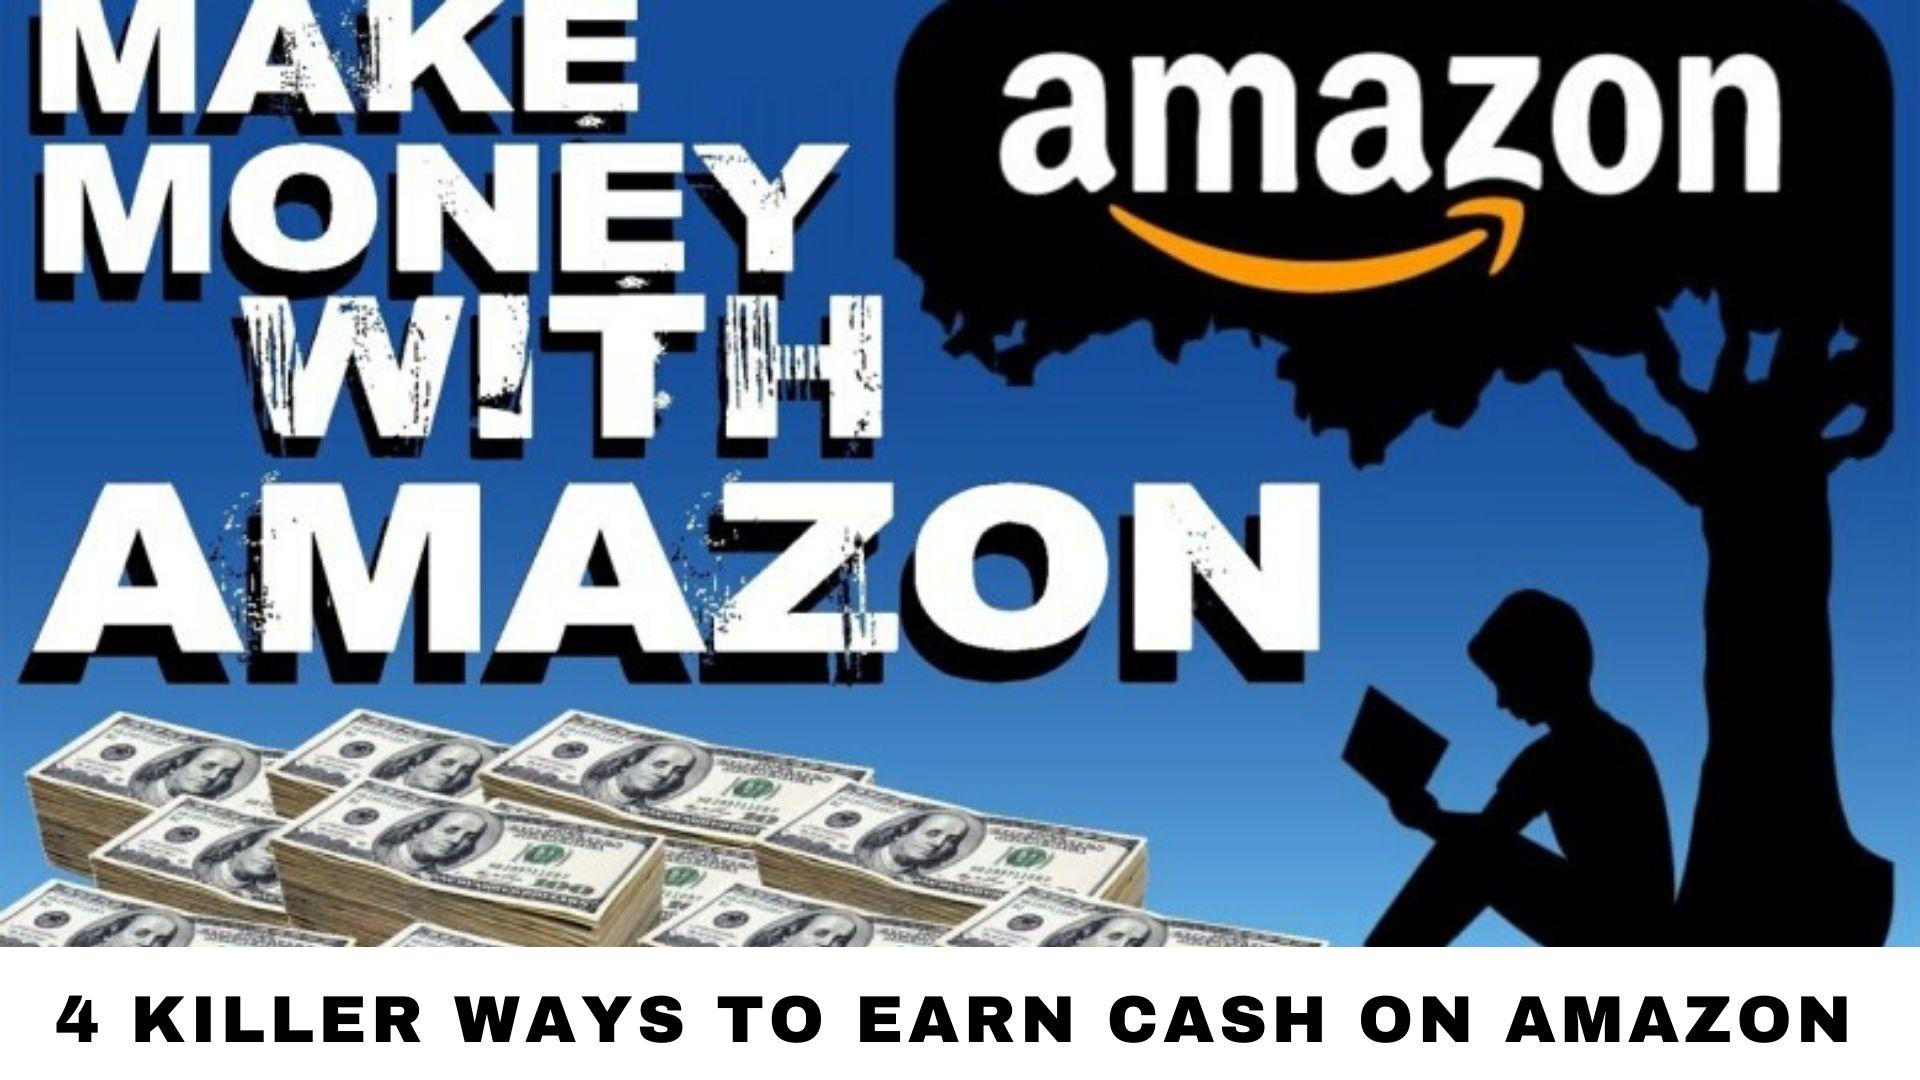 How to Make Money on Amazon in 2020: 4 Killer Ways to Earn Cash on Amazon